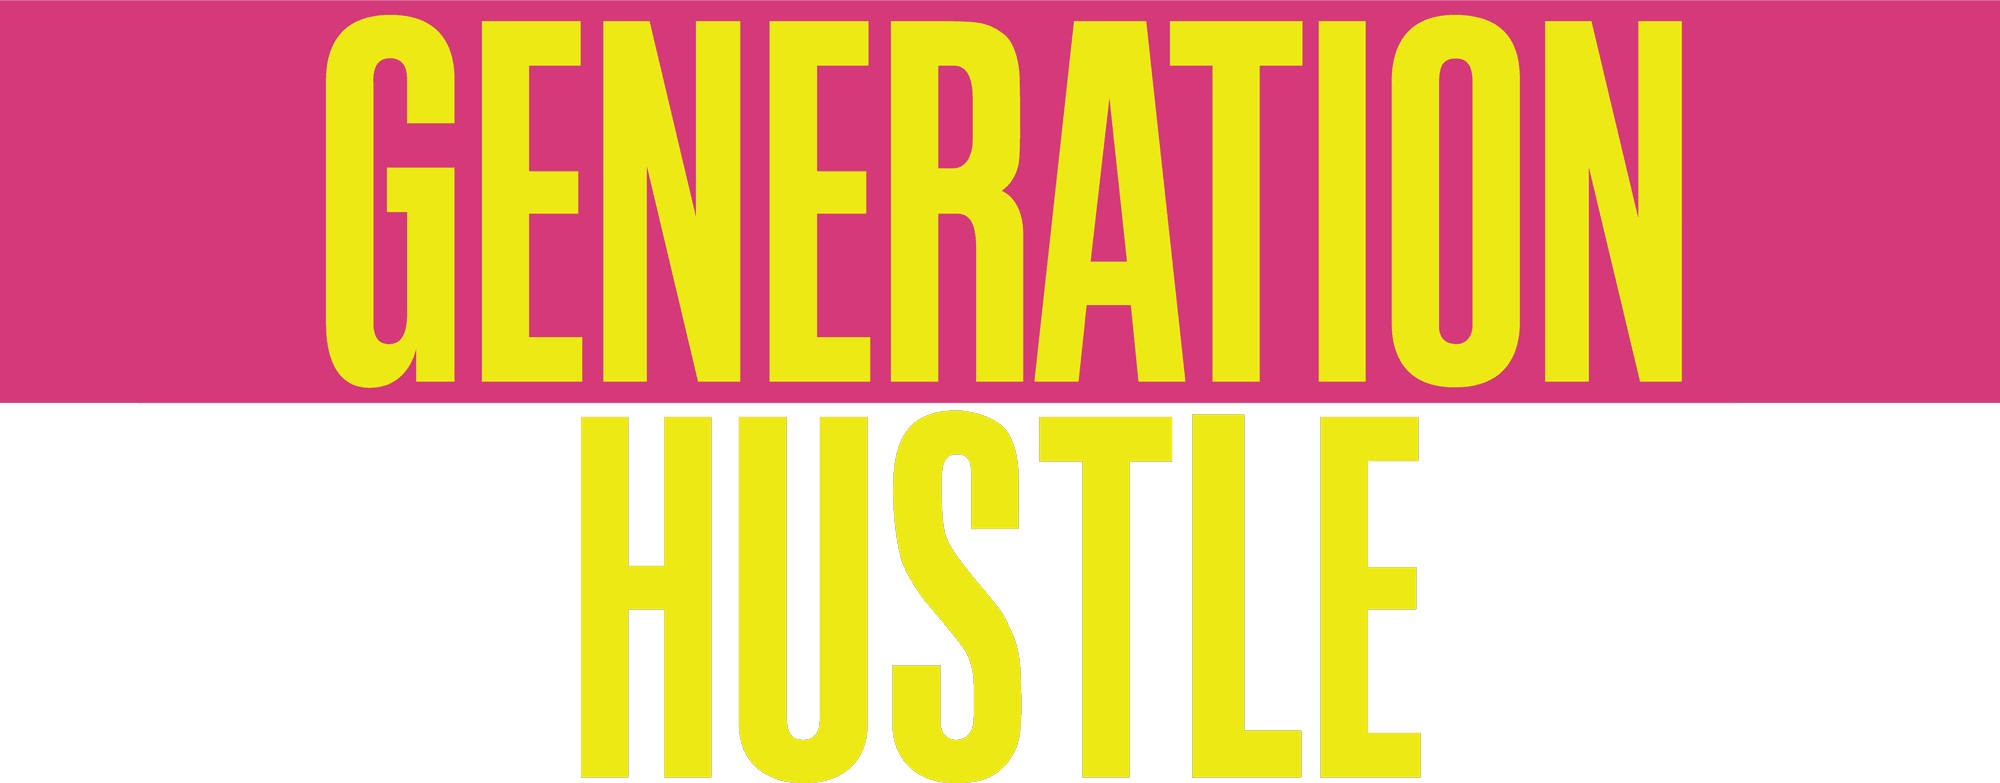 Generation Hustle logo